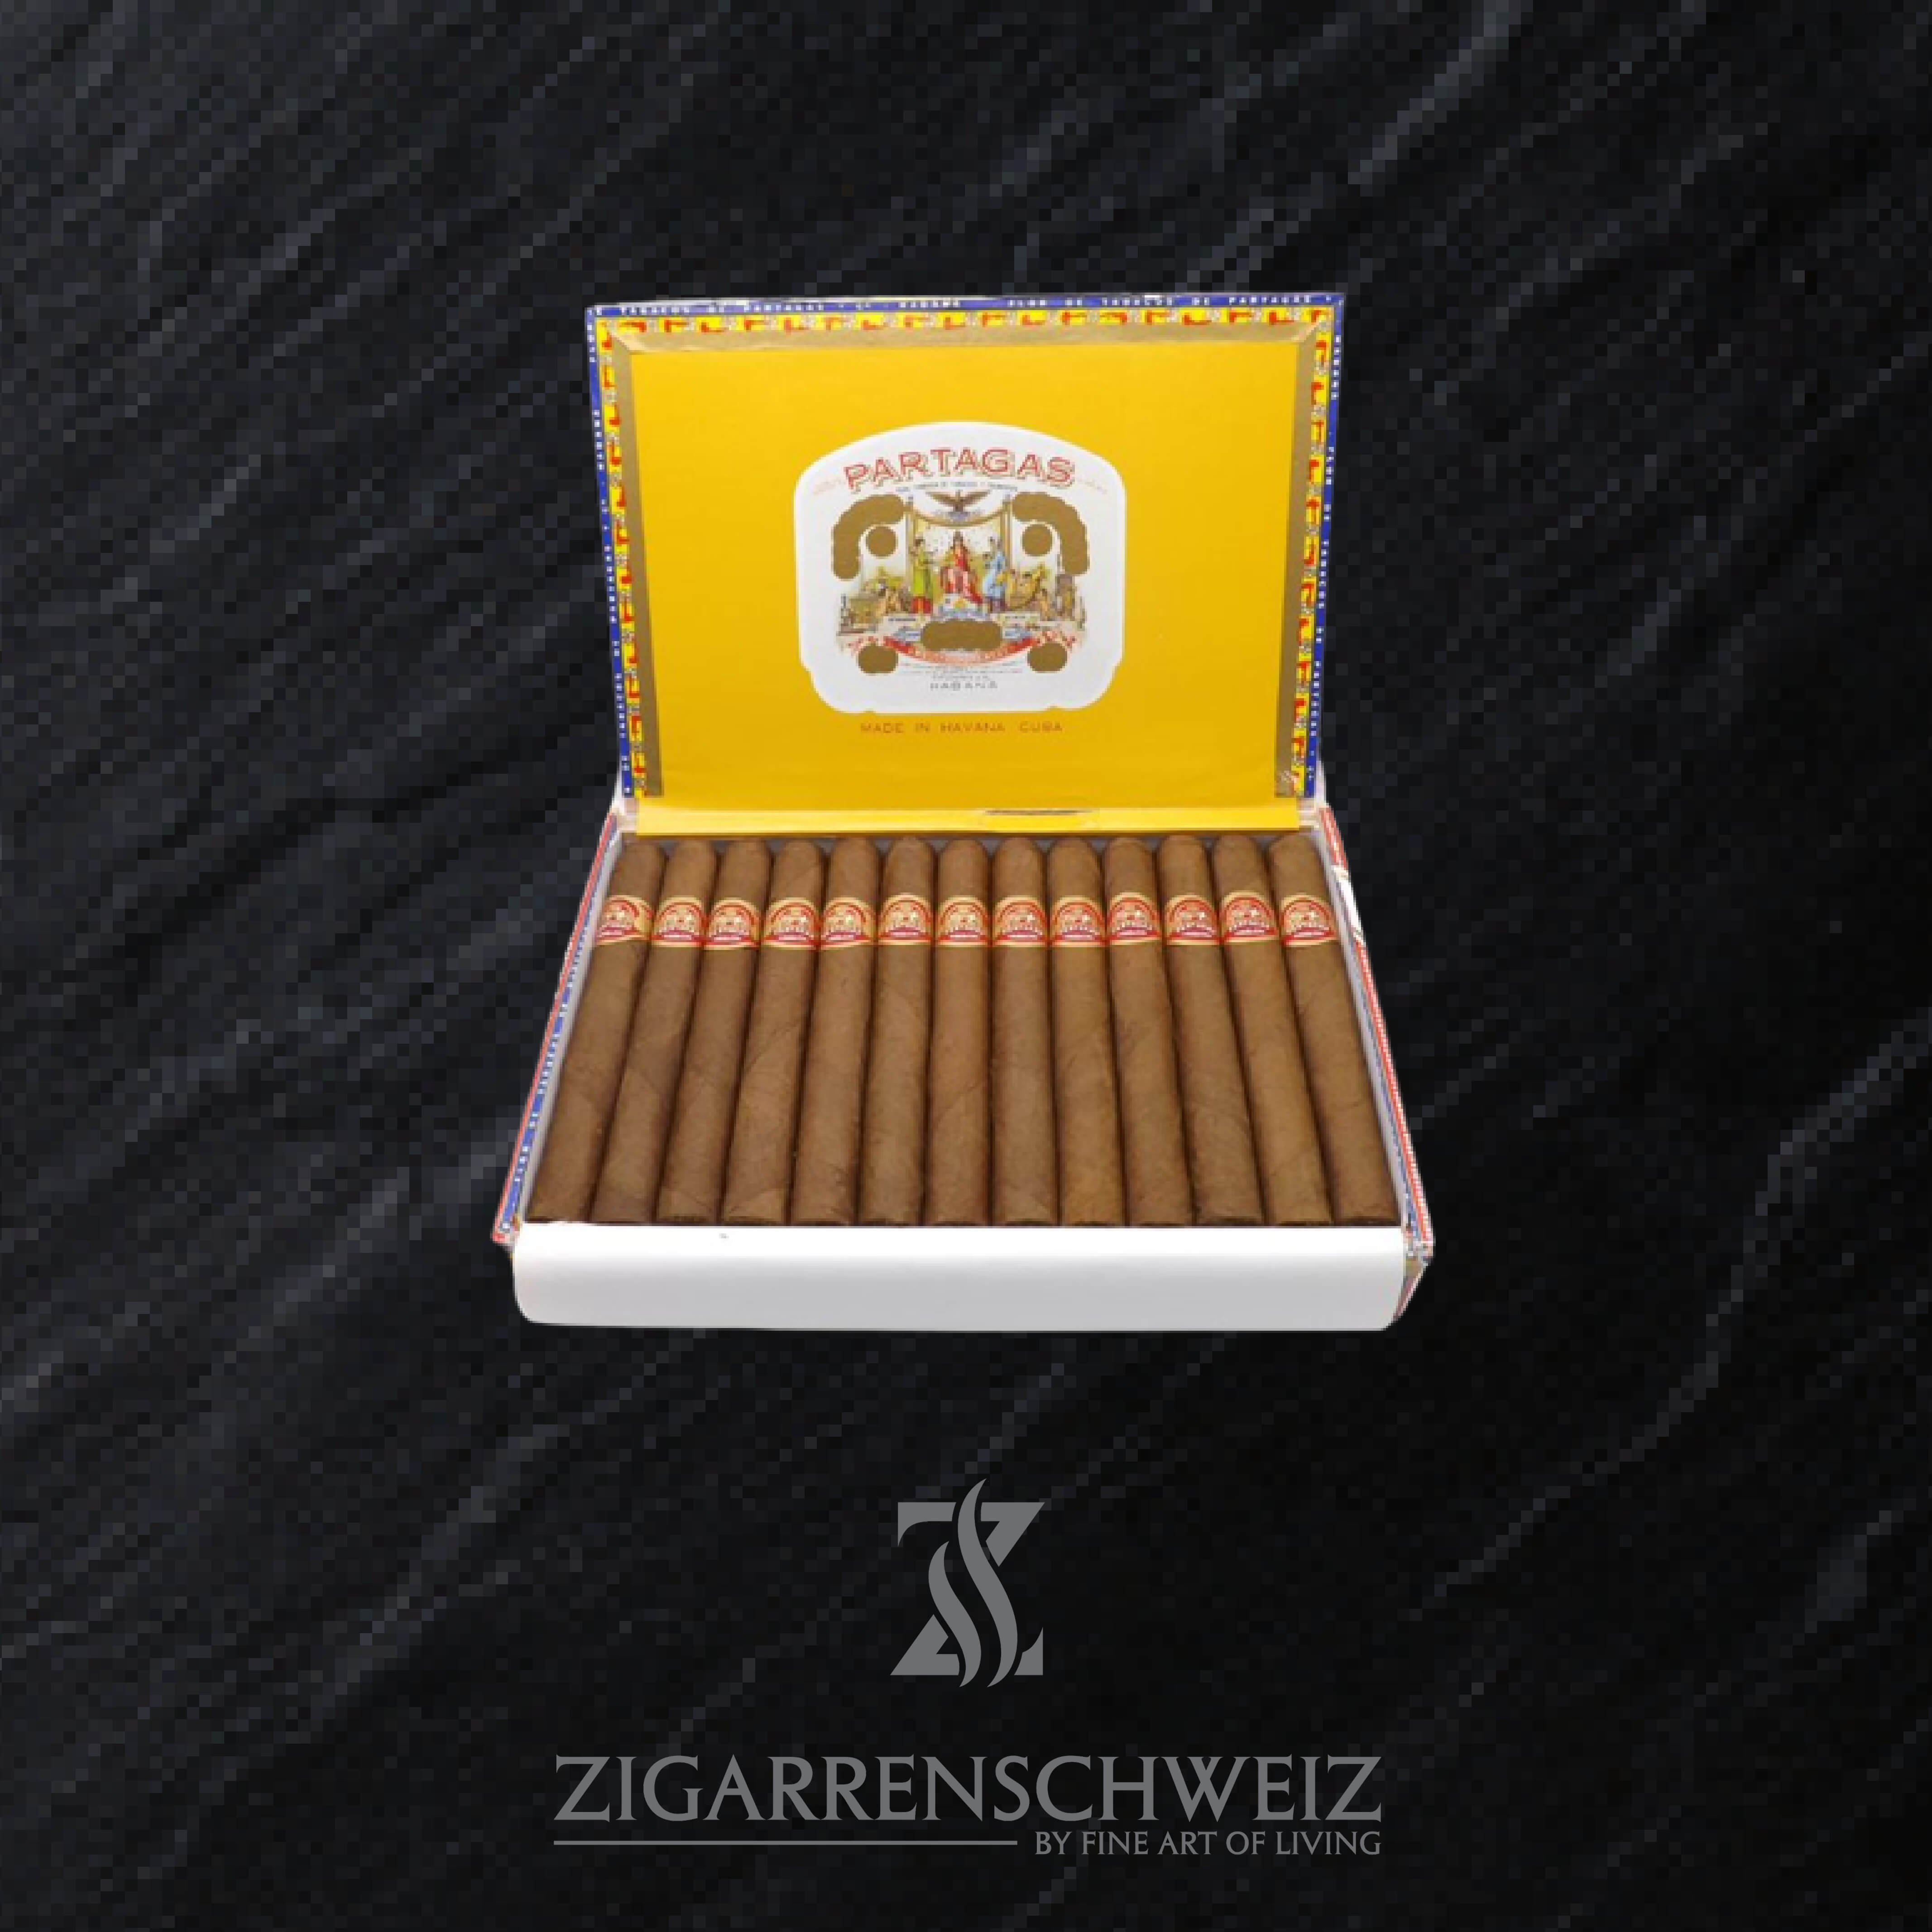 25er Kiste Partagas Petit Coronas Zigarren aus Kuba